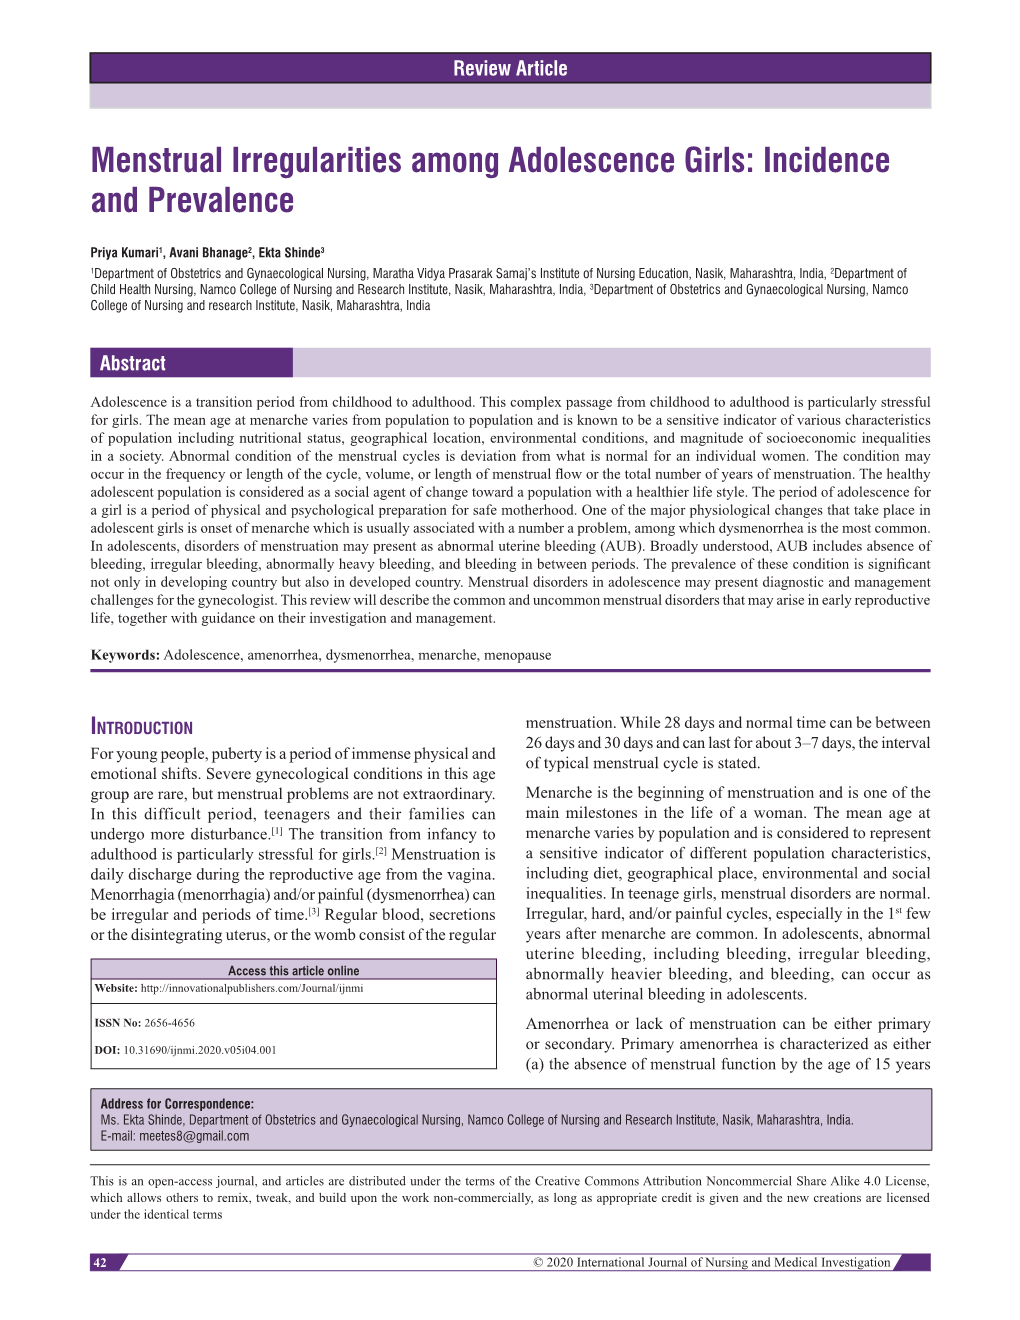 Menstrual Irregularities Among Adolescence Girls: Incidence and Prevalence